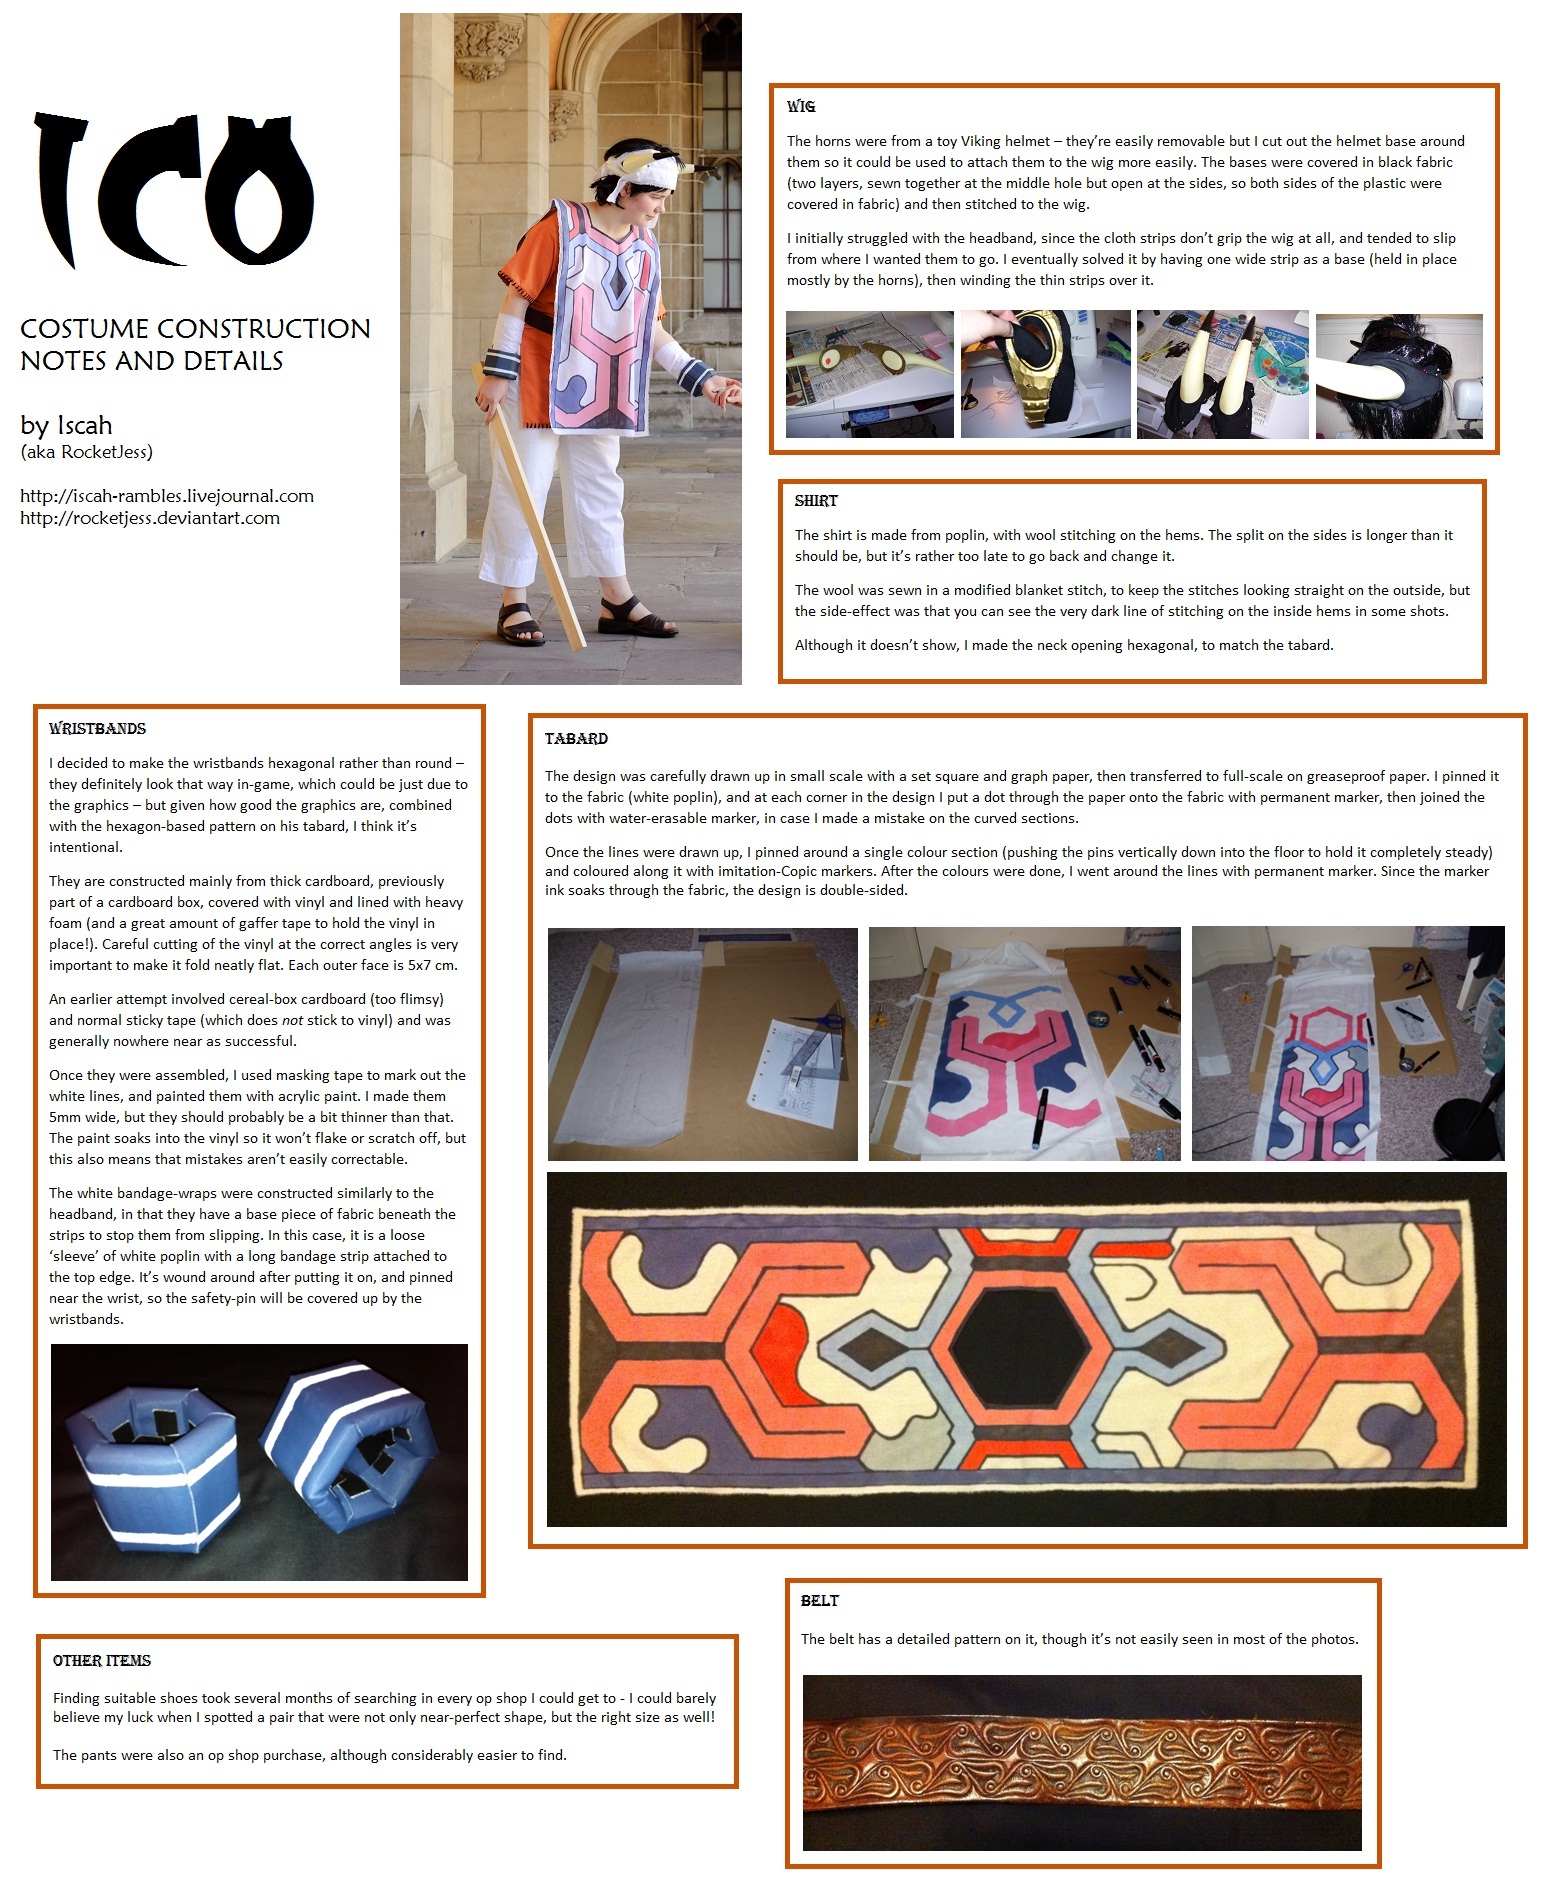 Ico Cosplay - costume details